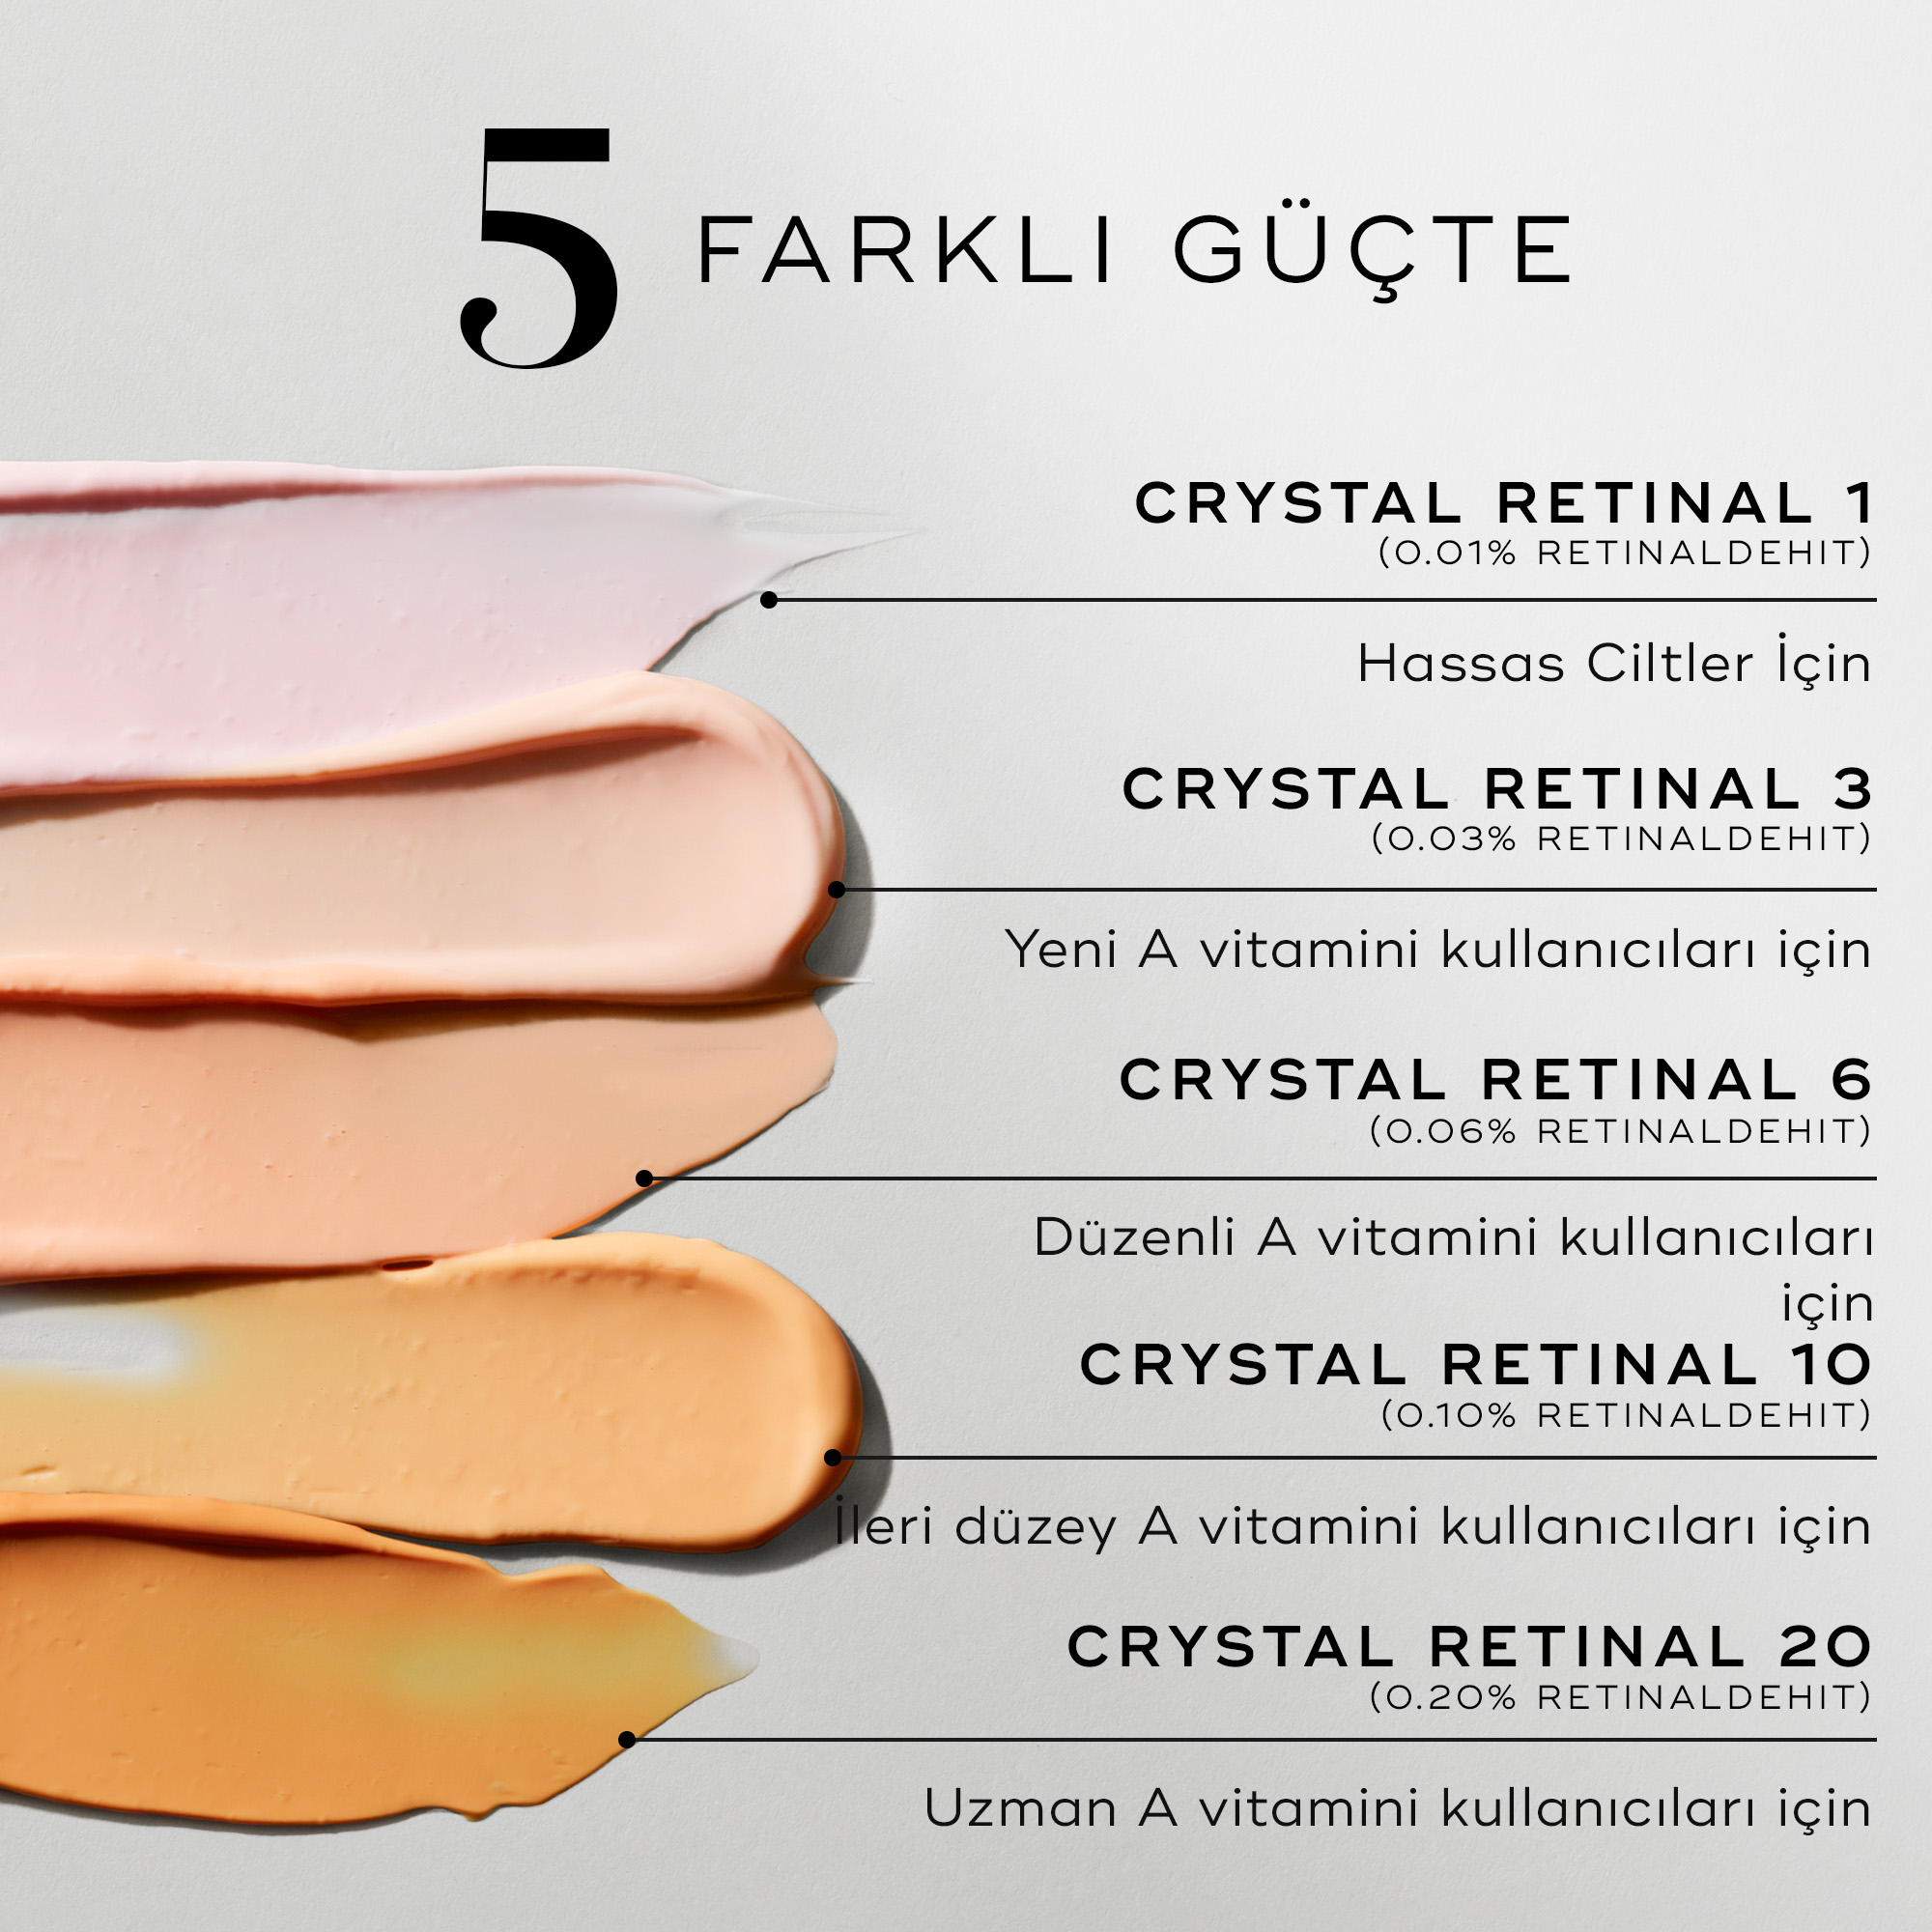 Crystal Retinal 6™